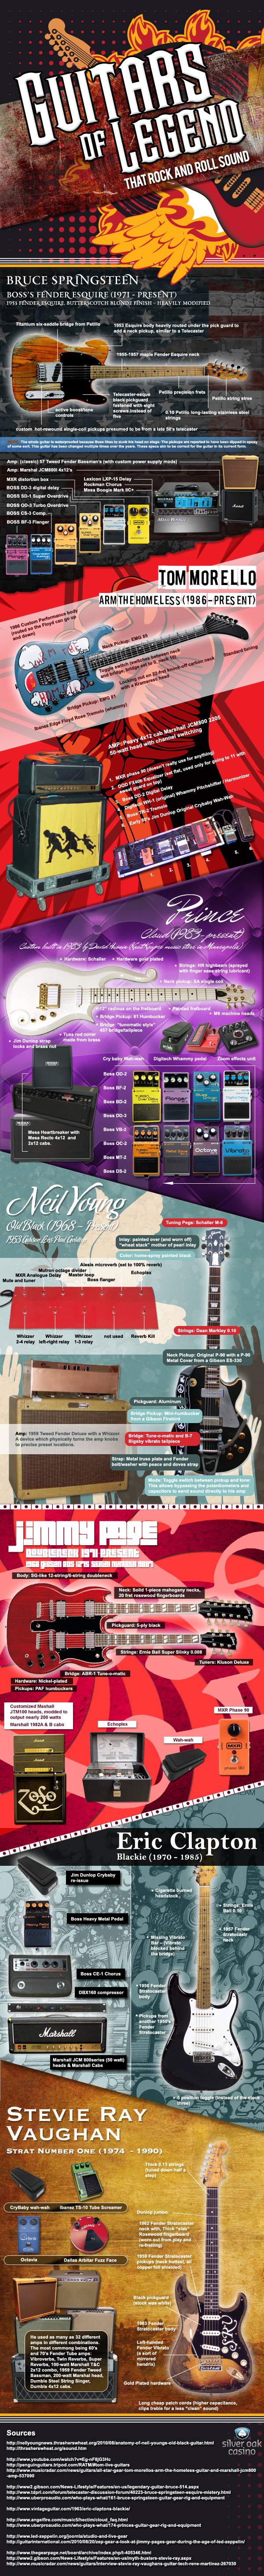 guitars-of-legend-infographic